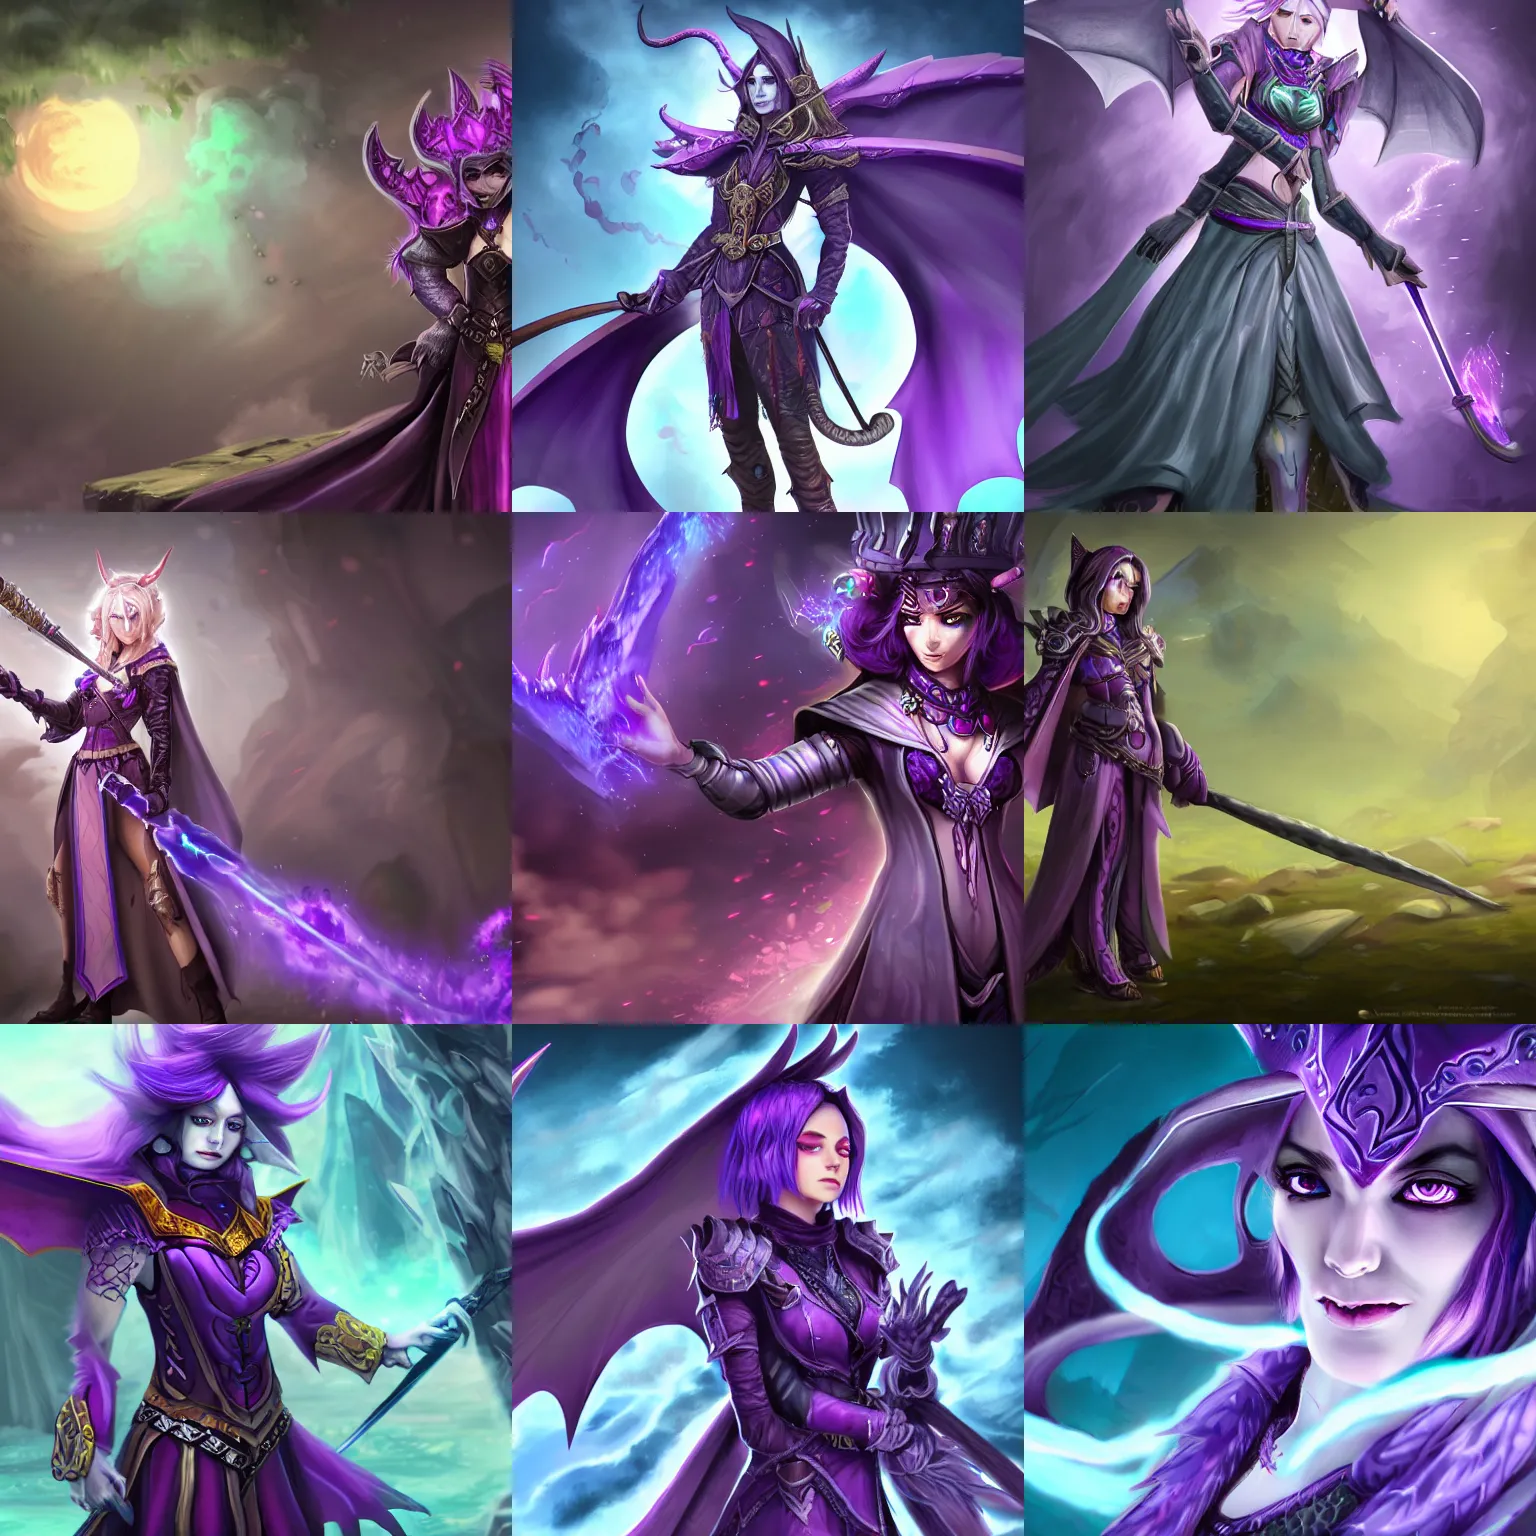 Prompt: DnD female dragonic sorcerer, purple accents, highly detailed art, 4k, trending on pixiv